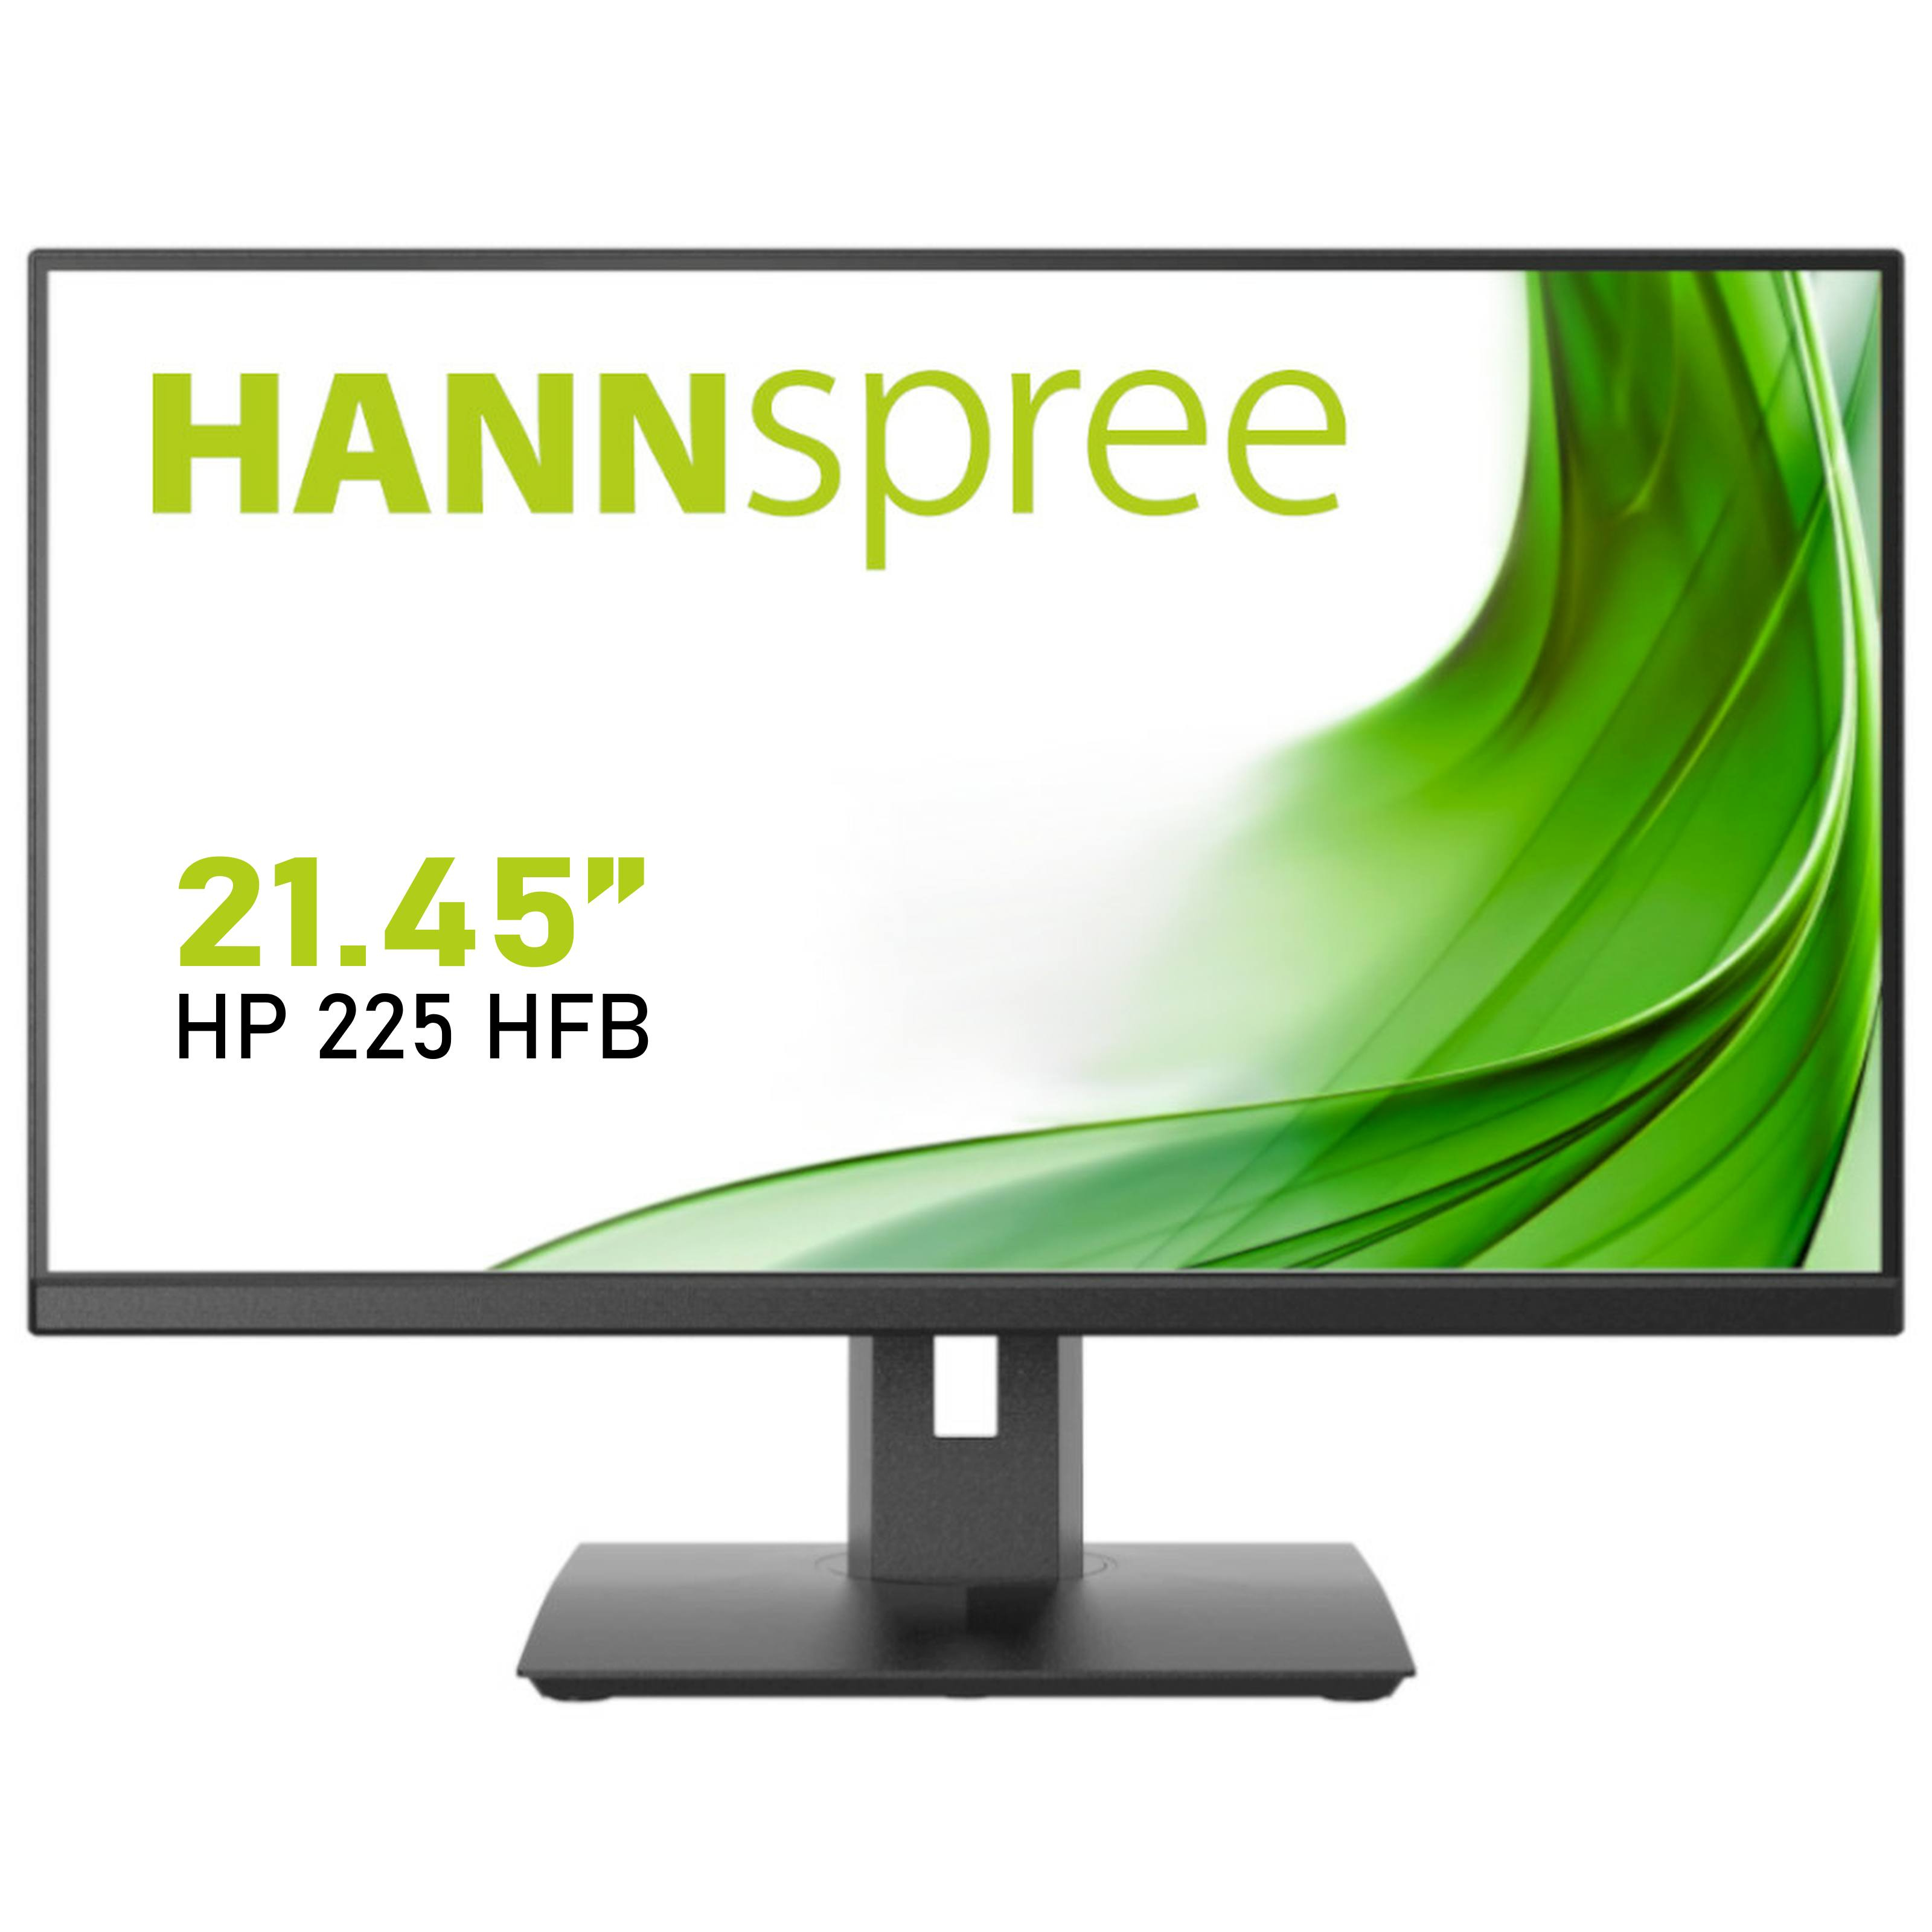 Hannspree HP 225 HFB